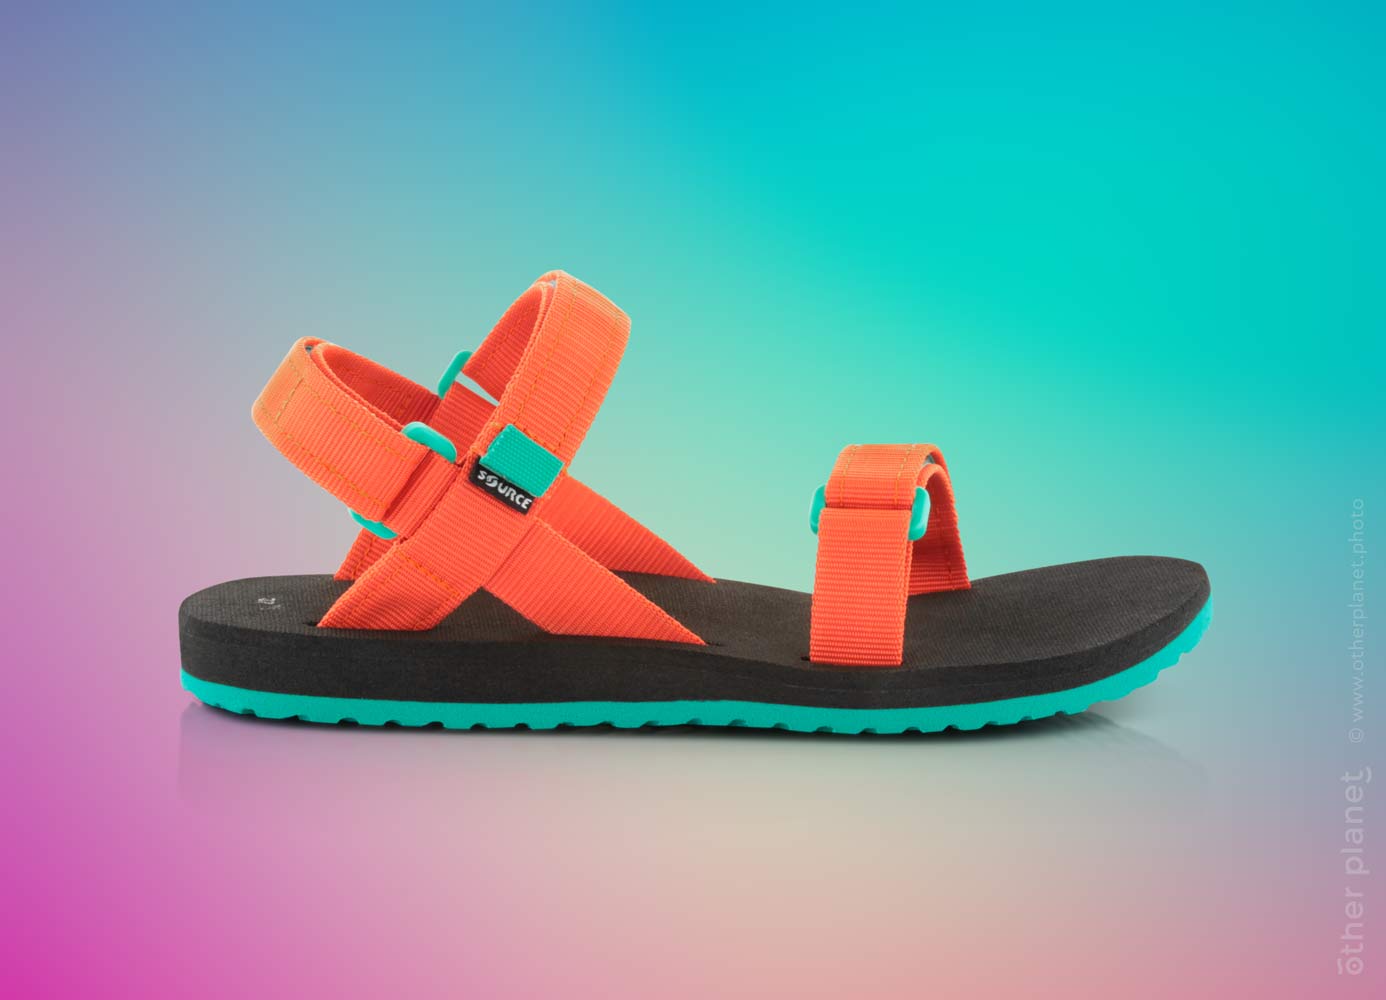 Source urban sandals packshot on colorful background